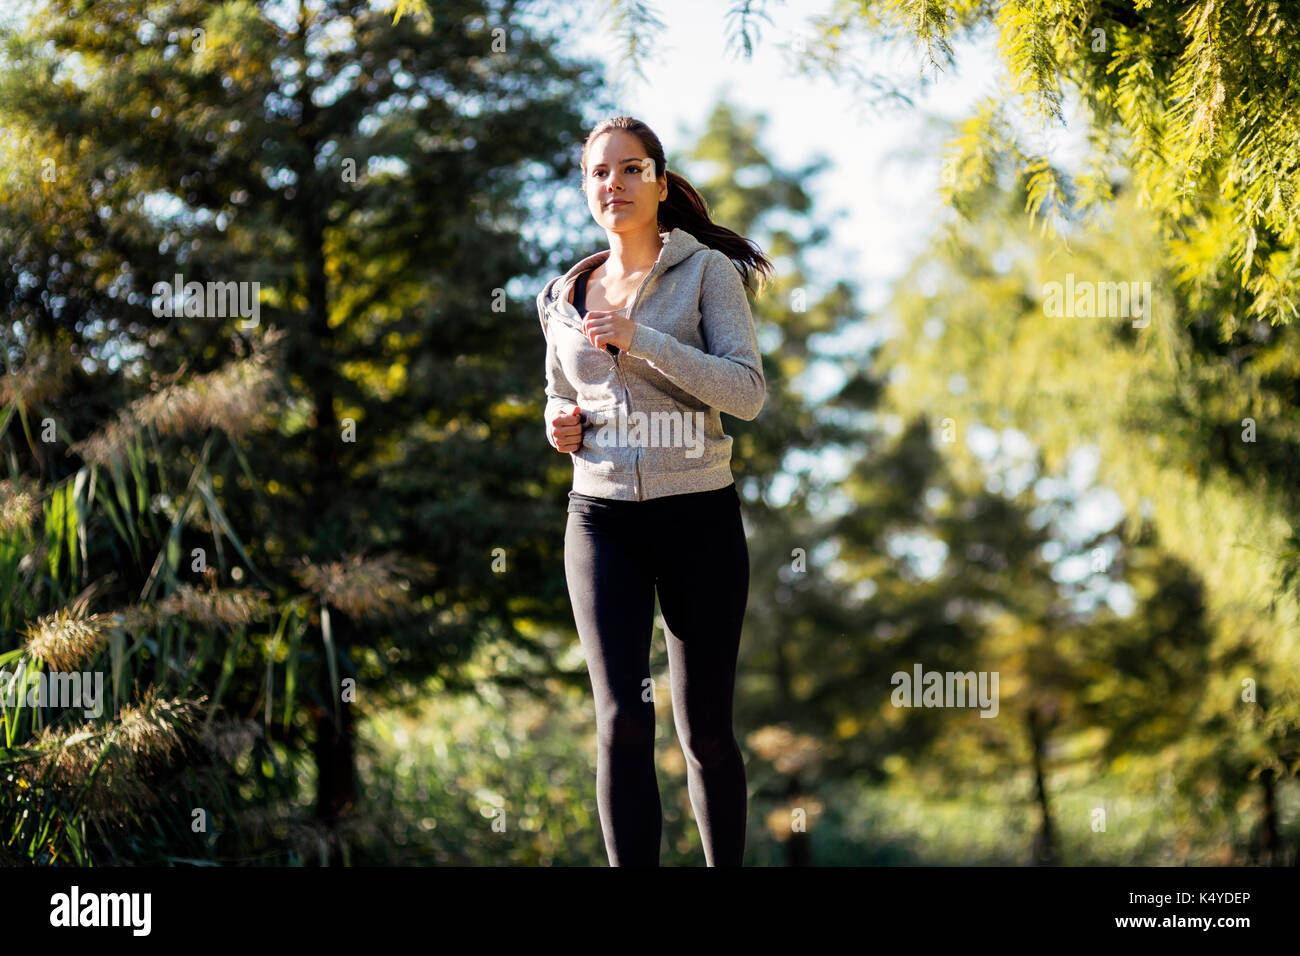 Beautiful woman jogging in nature Stock Photo